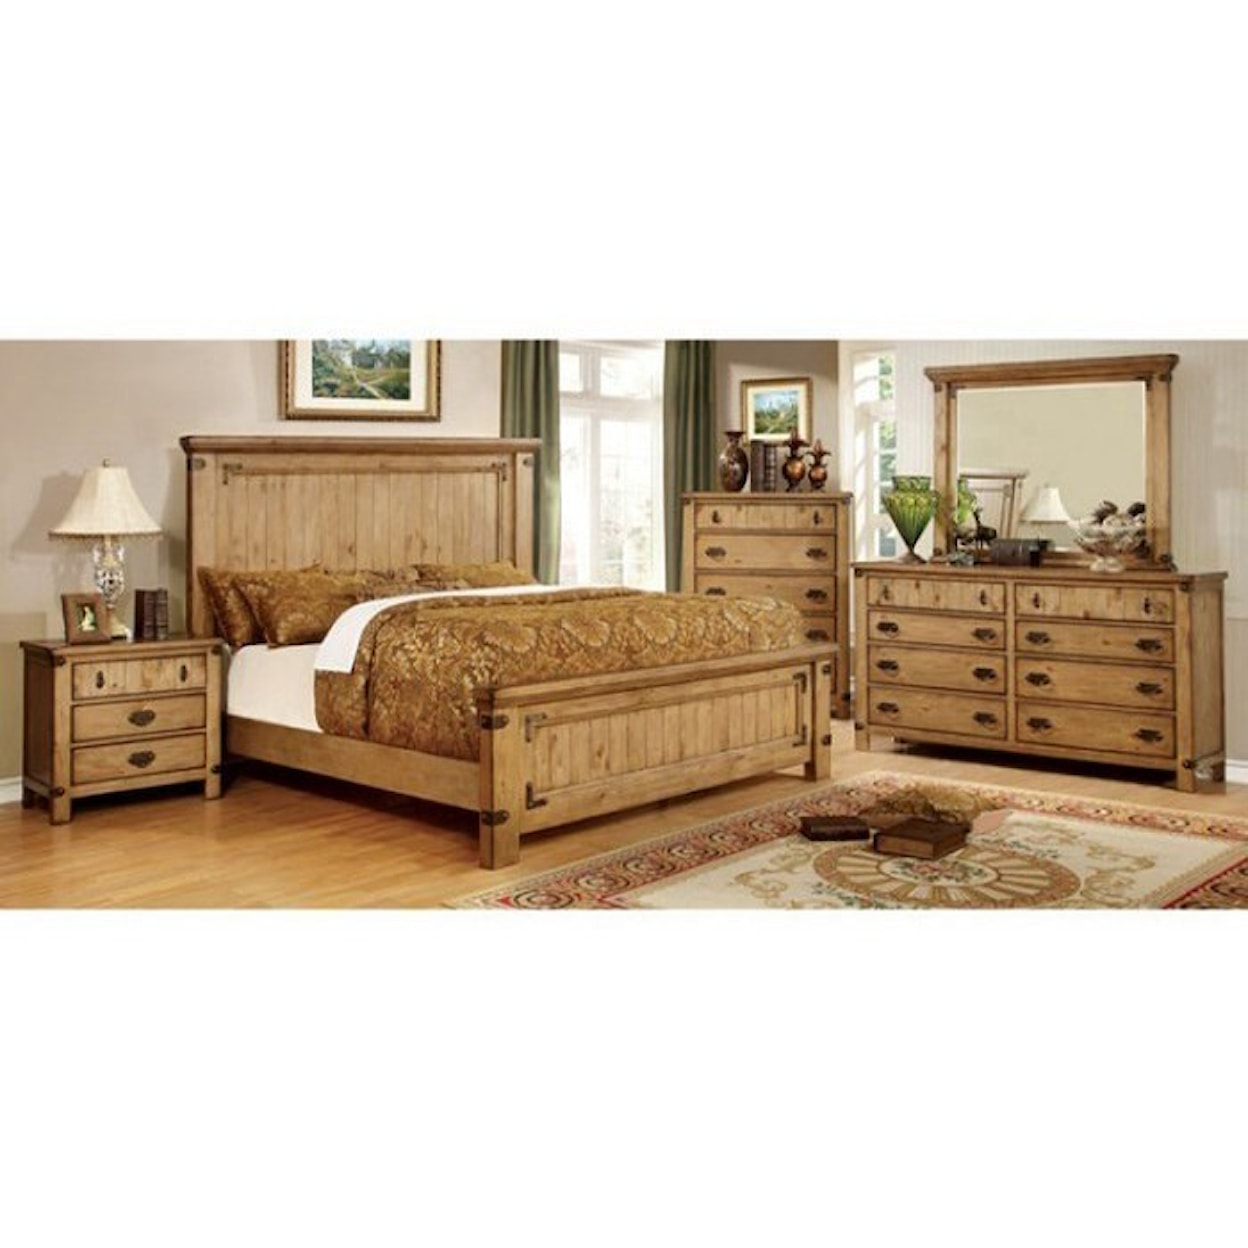 Furniture of America Pioneer Queen Bed